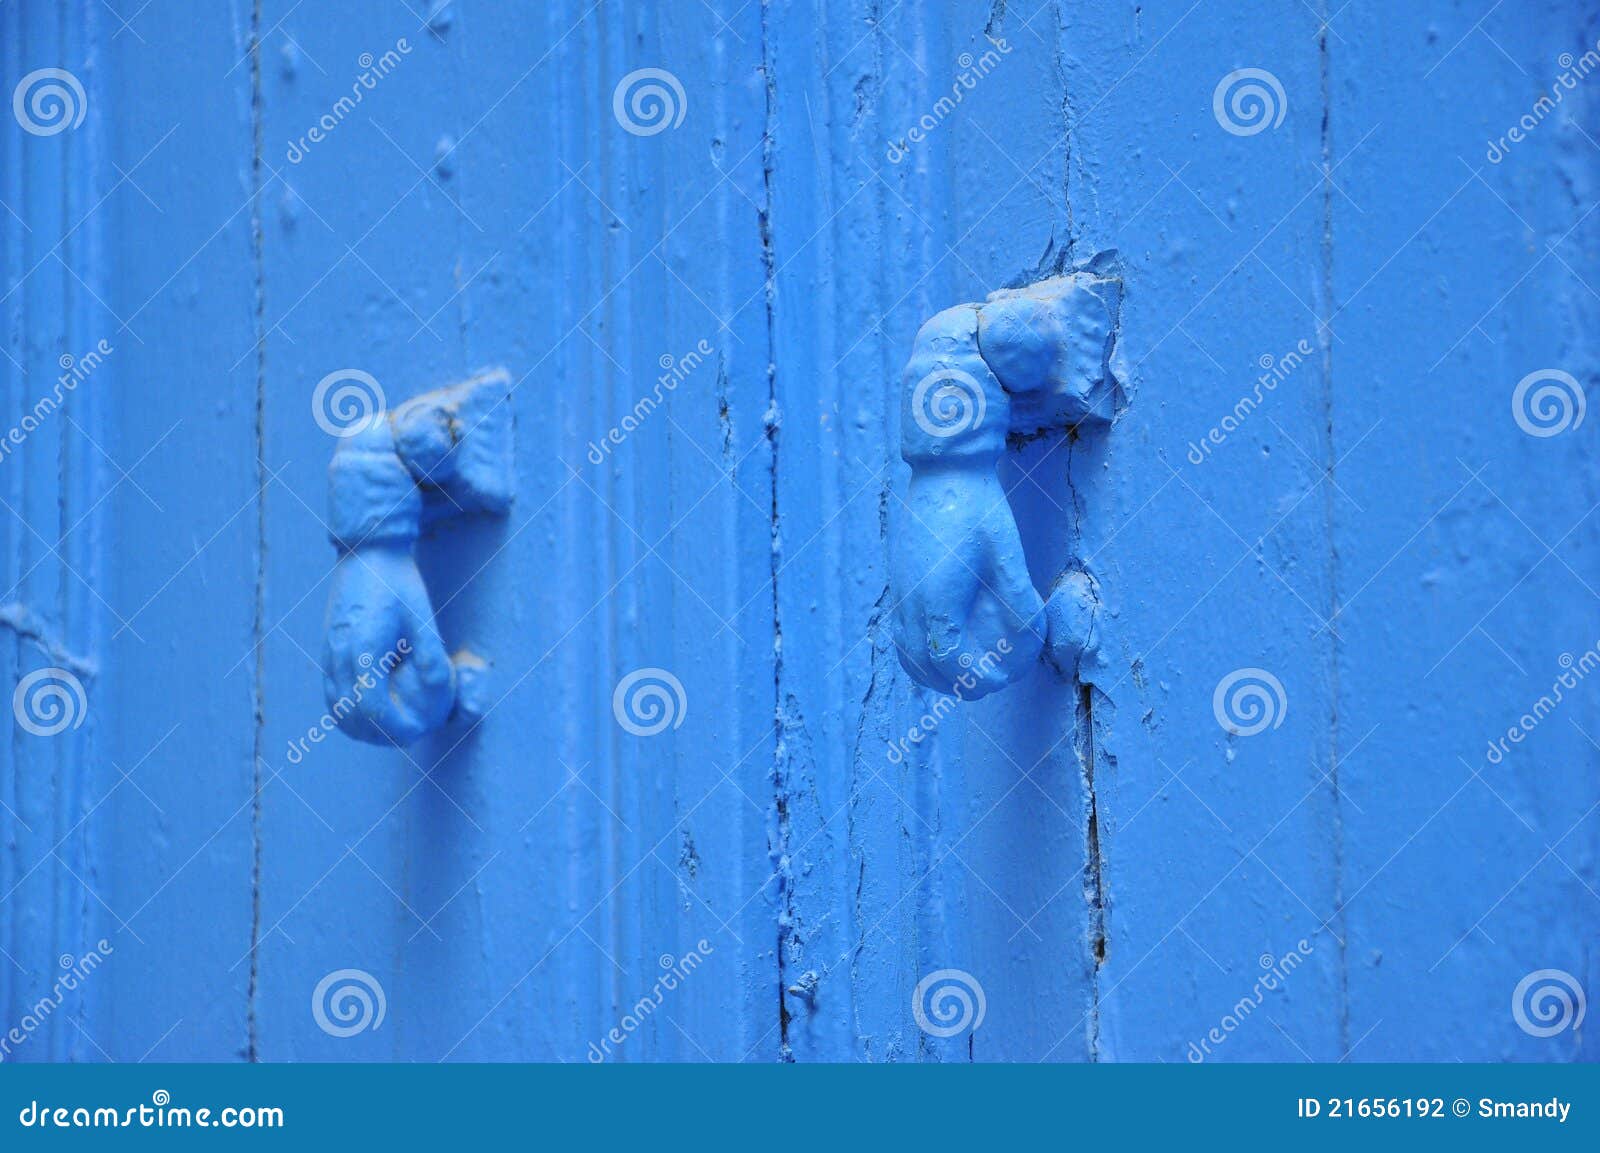 two blue knockers hand , tunisian blue door